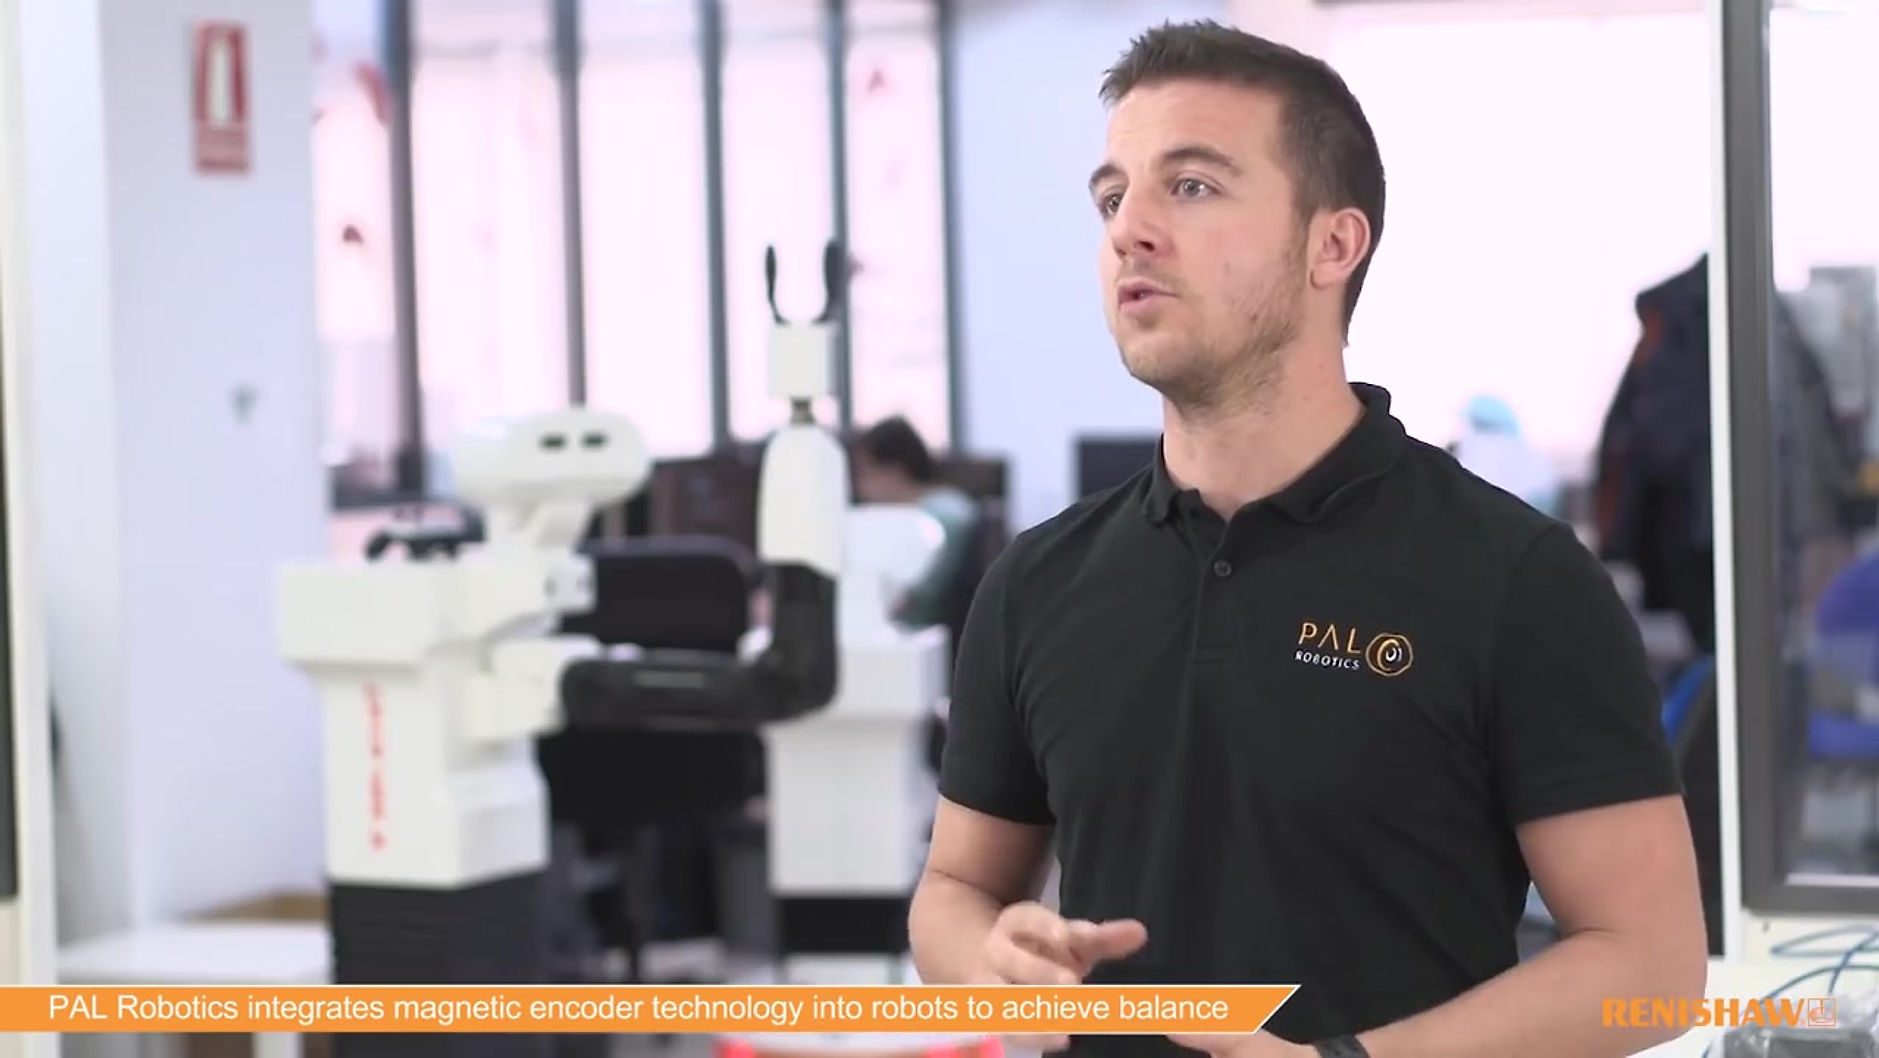 PAL Robotics integrates magnetic encoder technology into robots to achieve balance